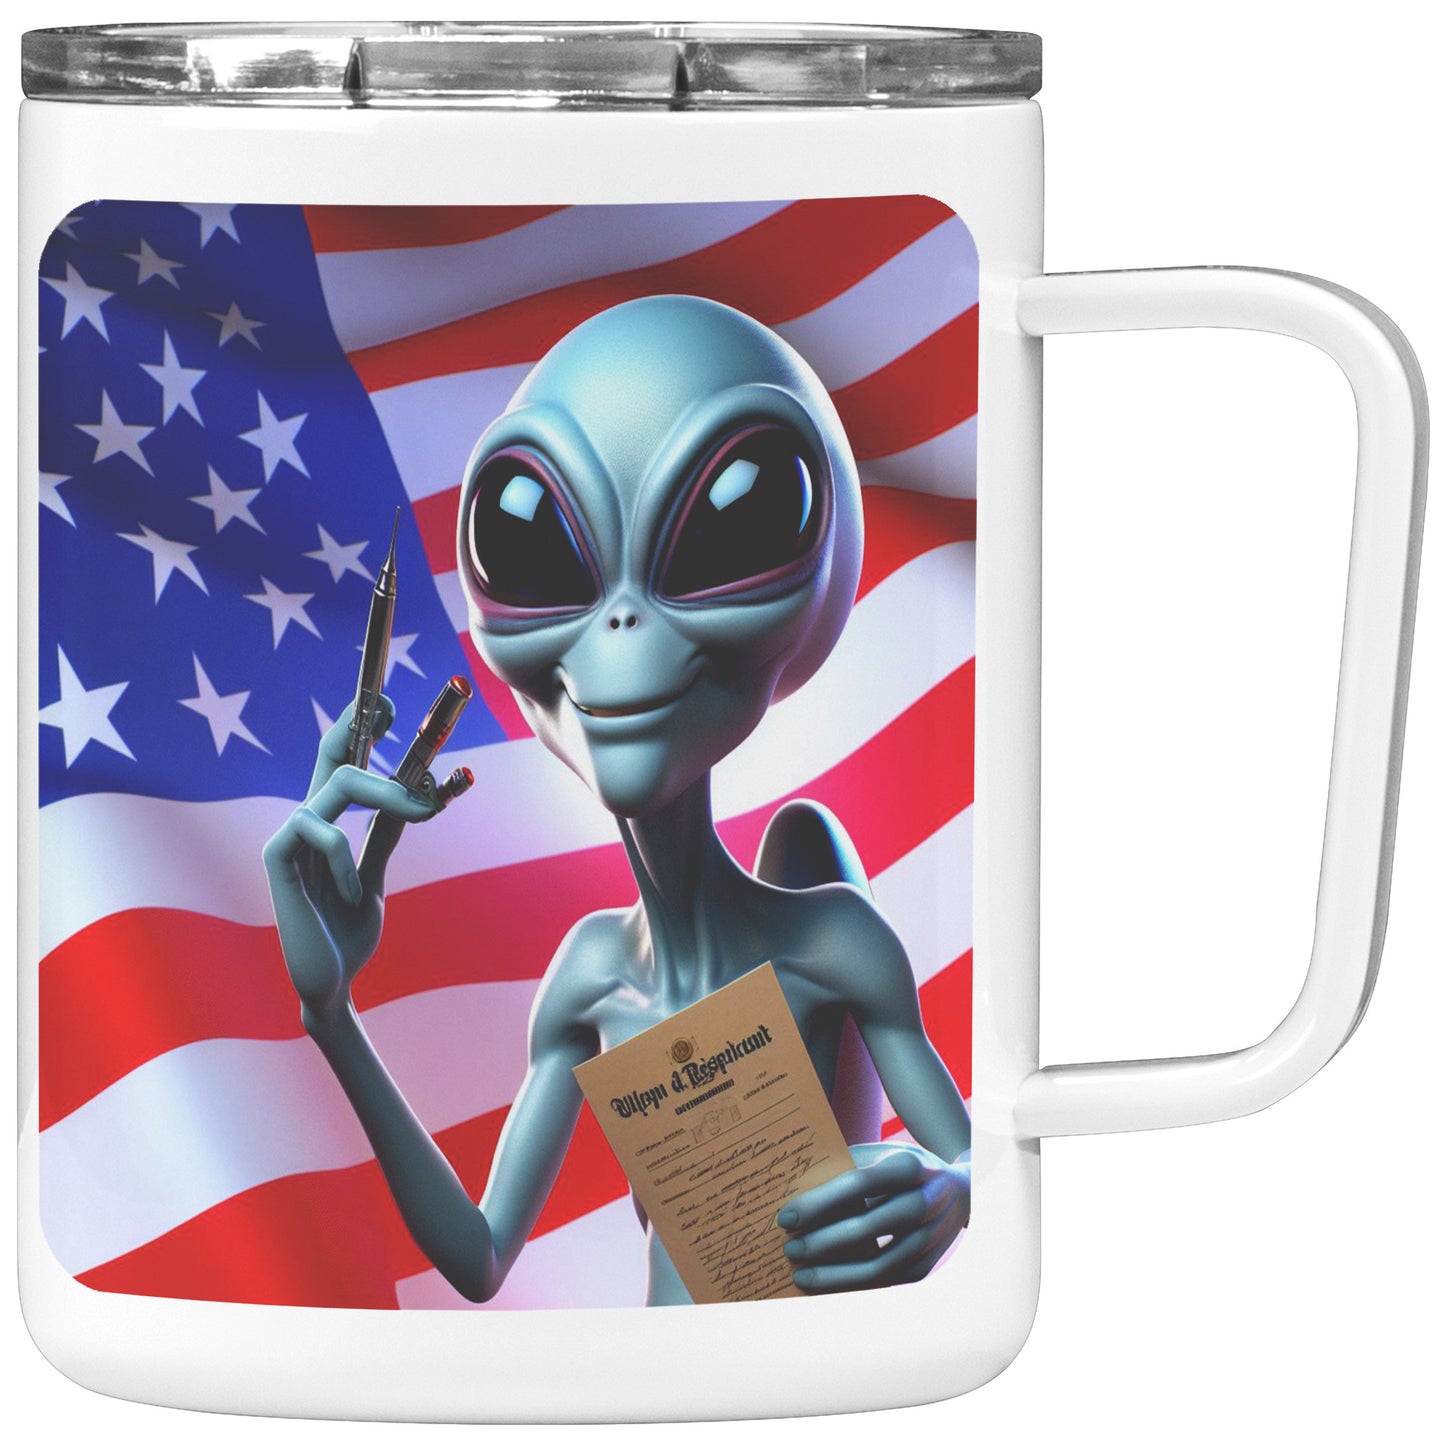 Nebulon the Grey Alien - Insulated Coffee Mug #13